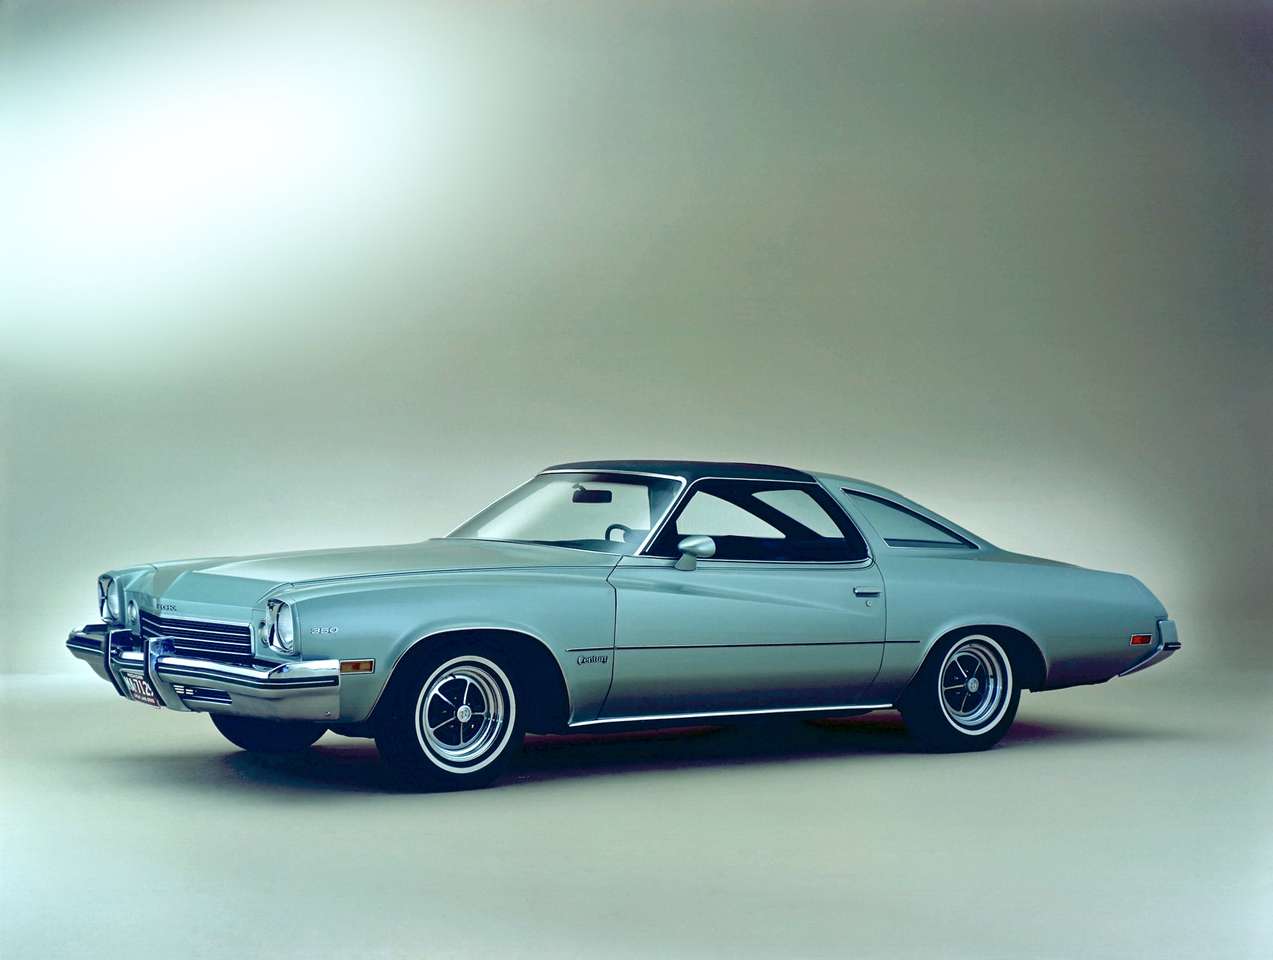 1973 Buick Century Hardtop Coupe pussel på nätet